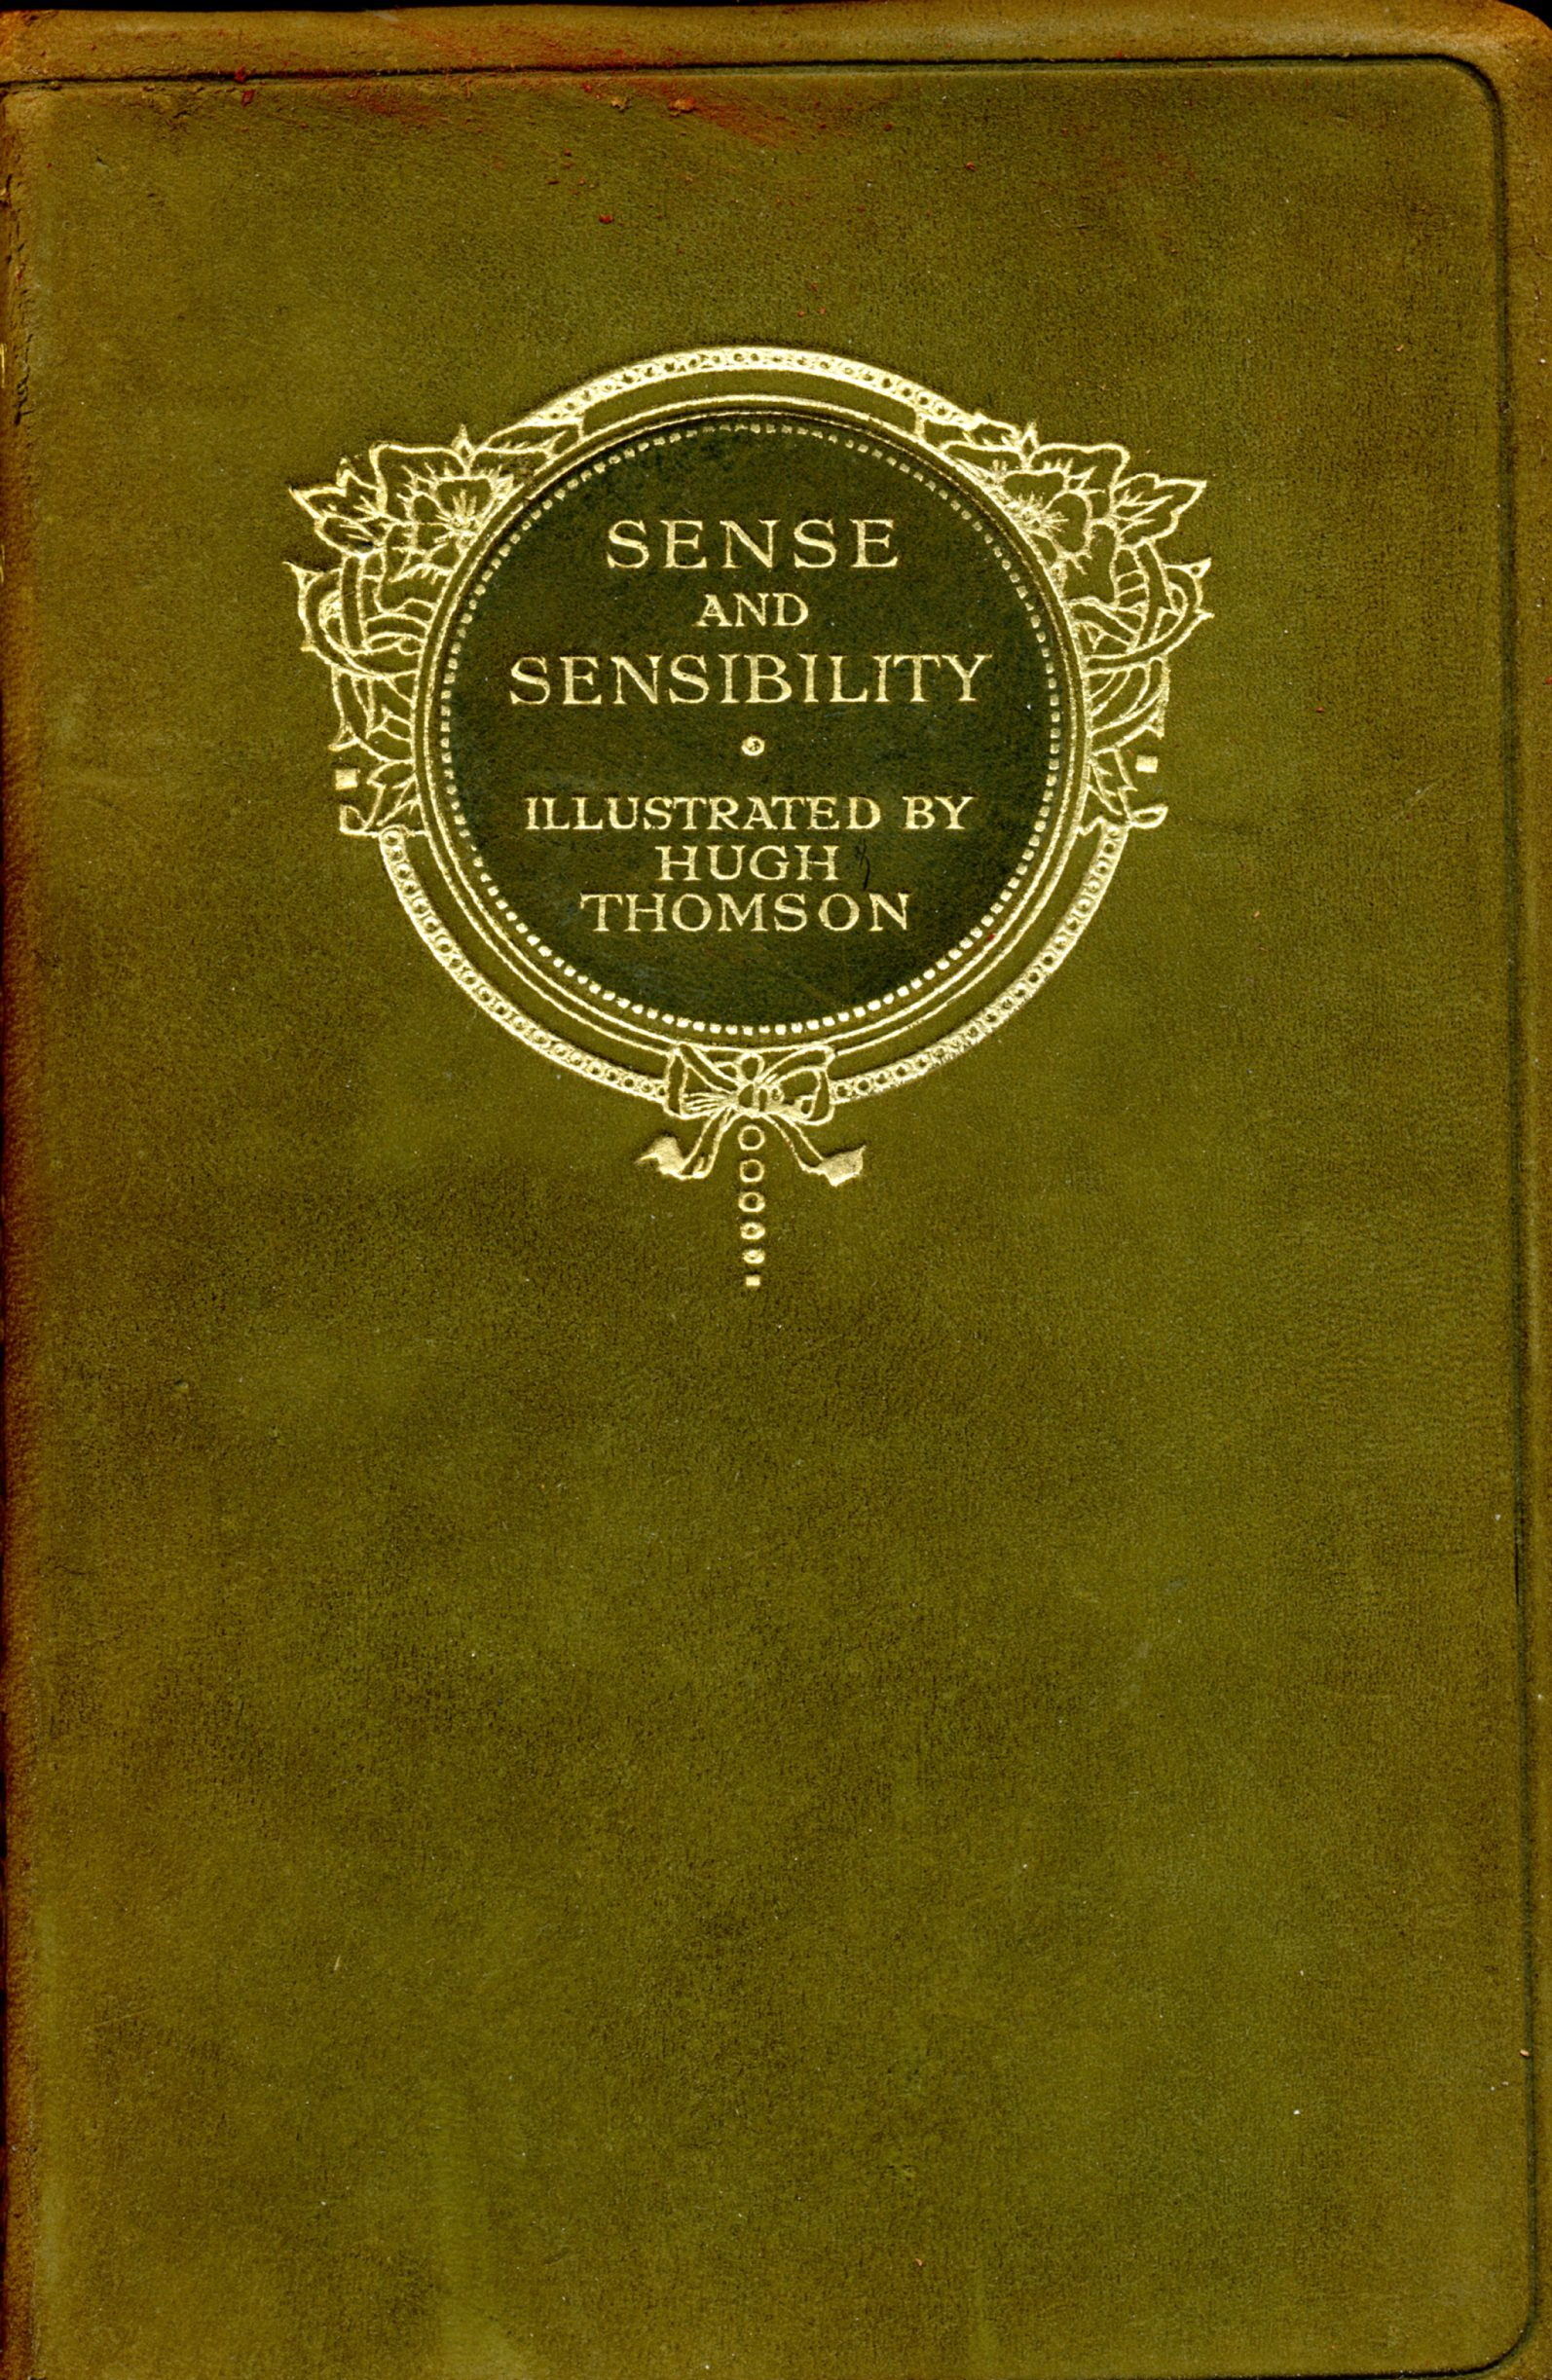 Sensibility #18